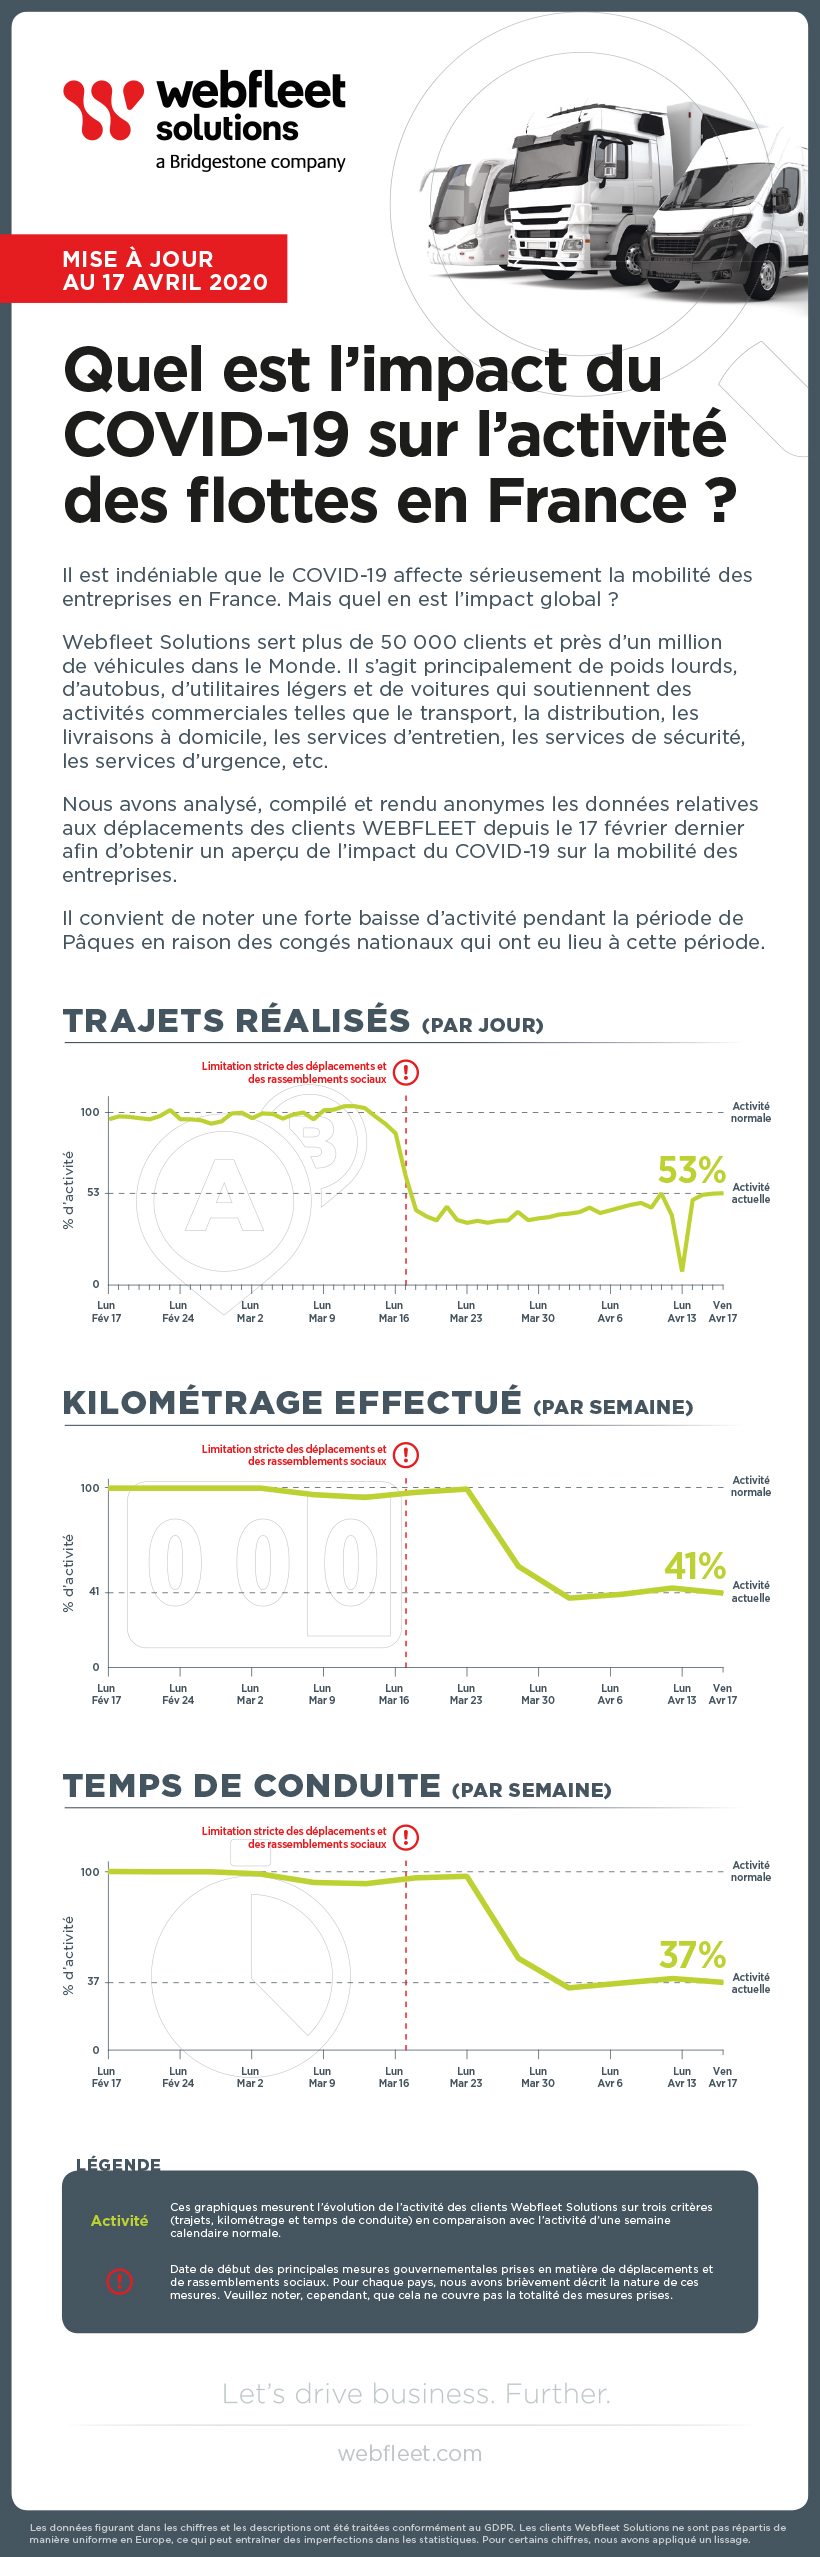 COVID19_Impact_infographic_EU_Apr17